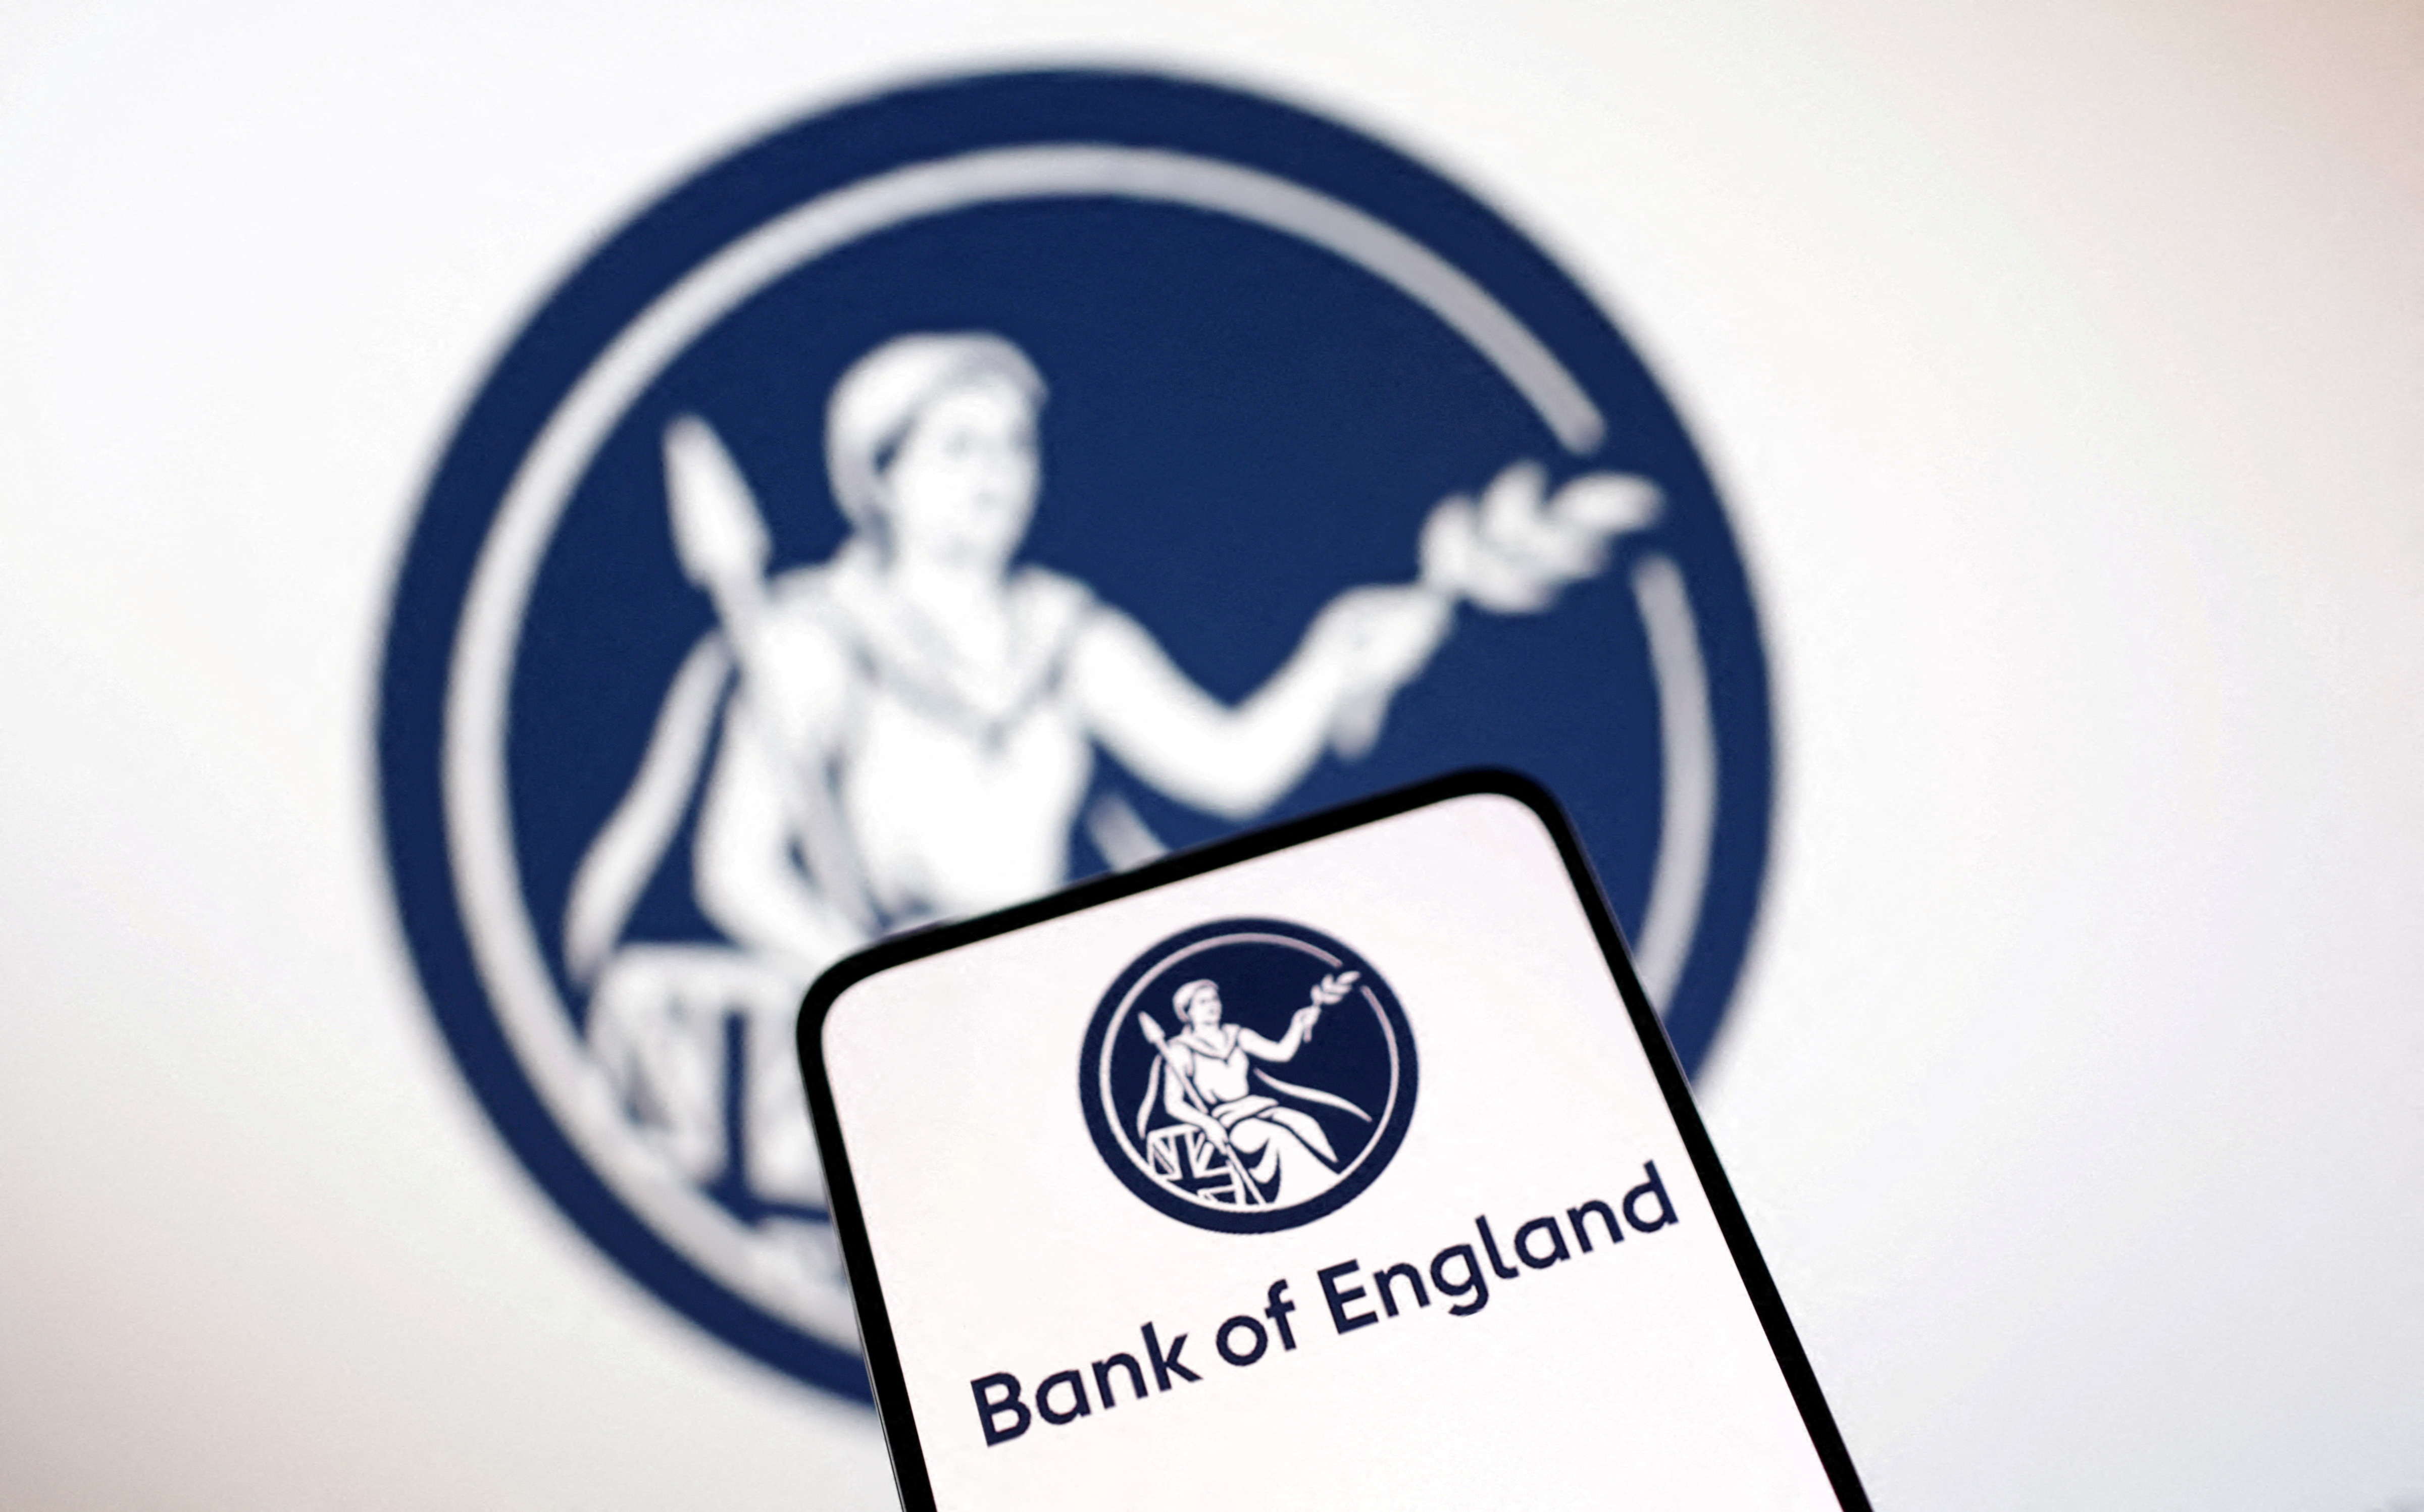 Illustration shows Bank of England logo